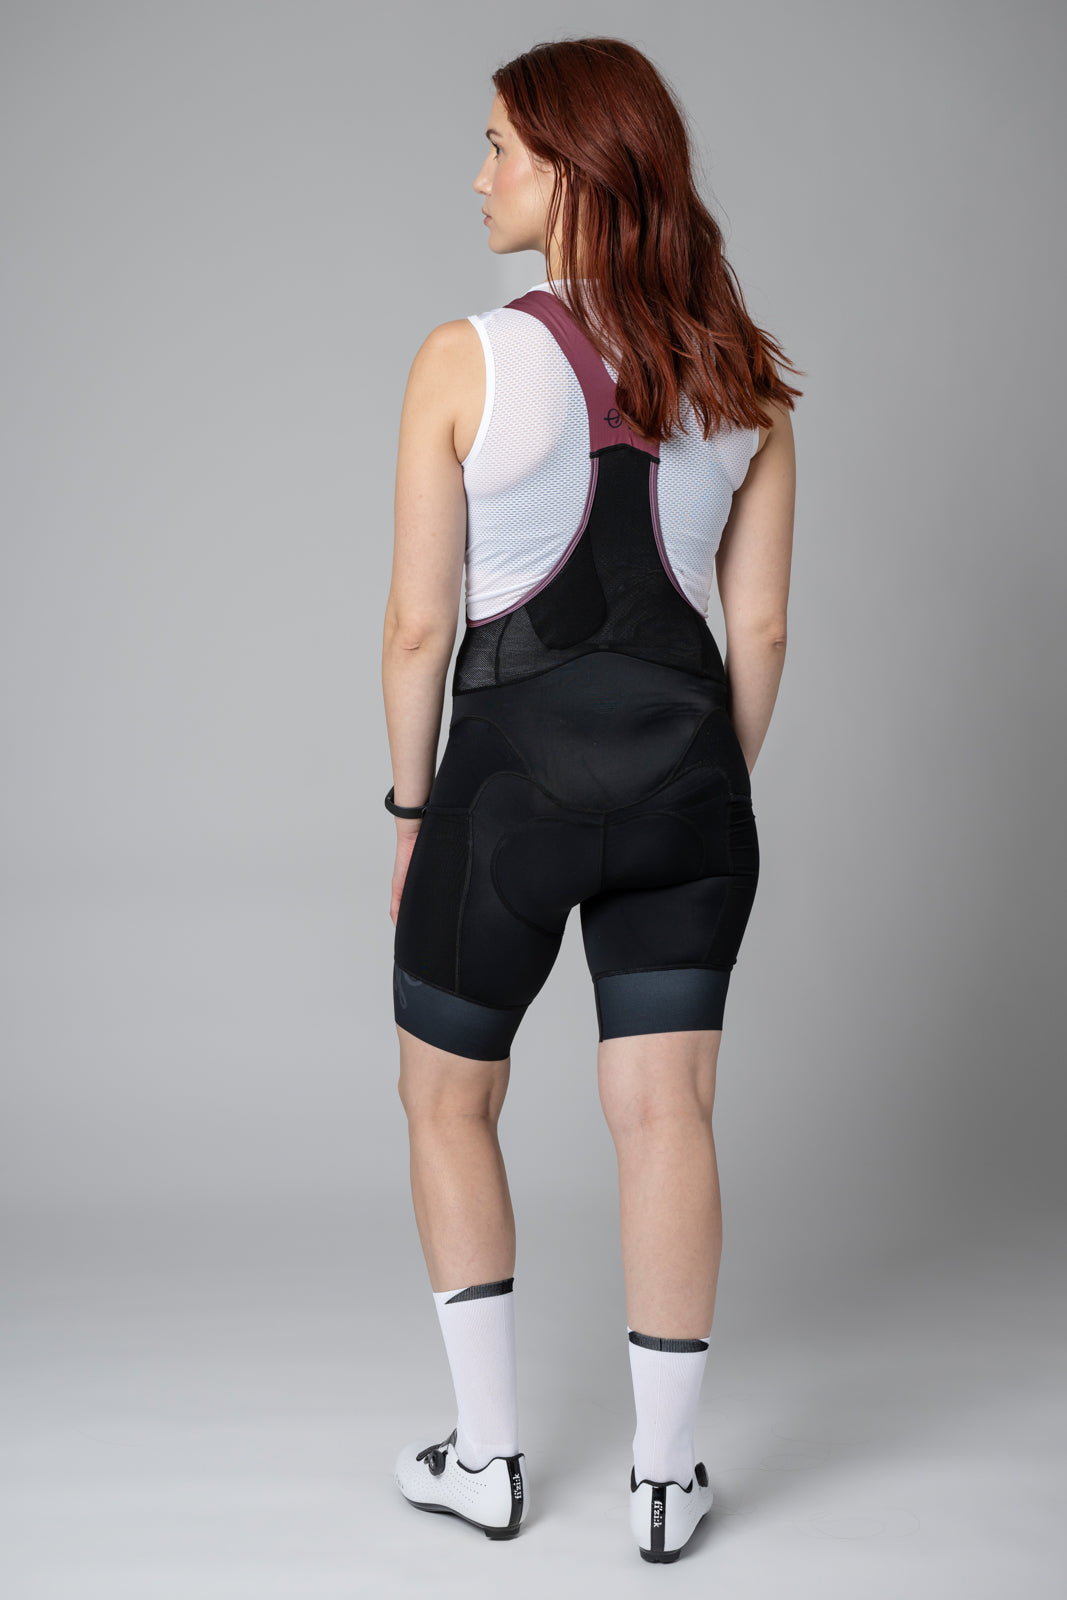 Sigr Riksväg 92 PRO Cargo - Cycling Bib Shorts with Thigh Pockets for Women